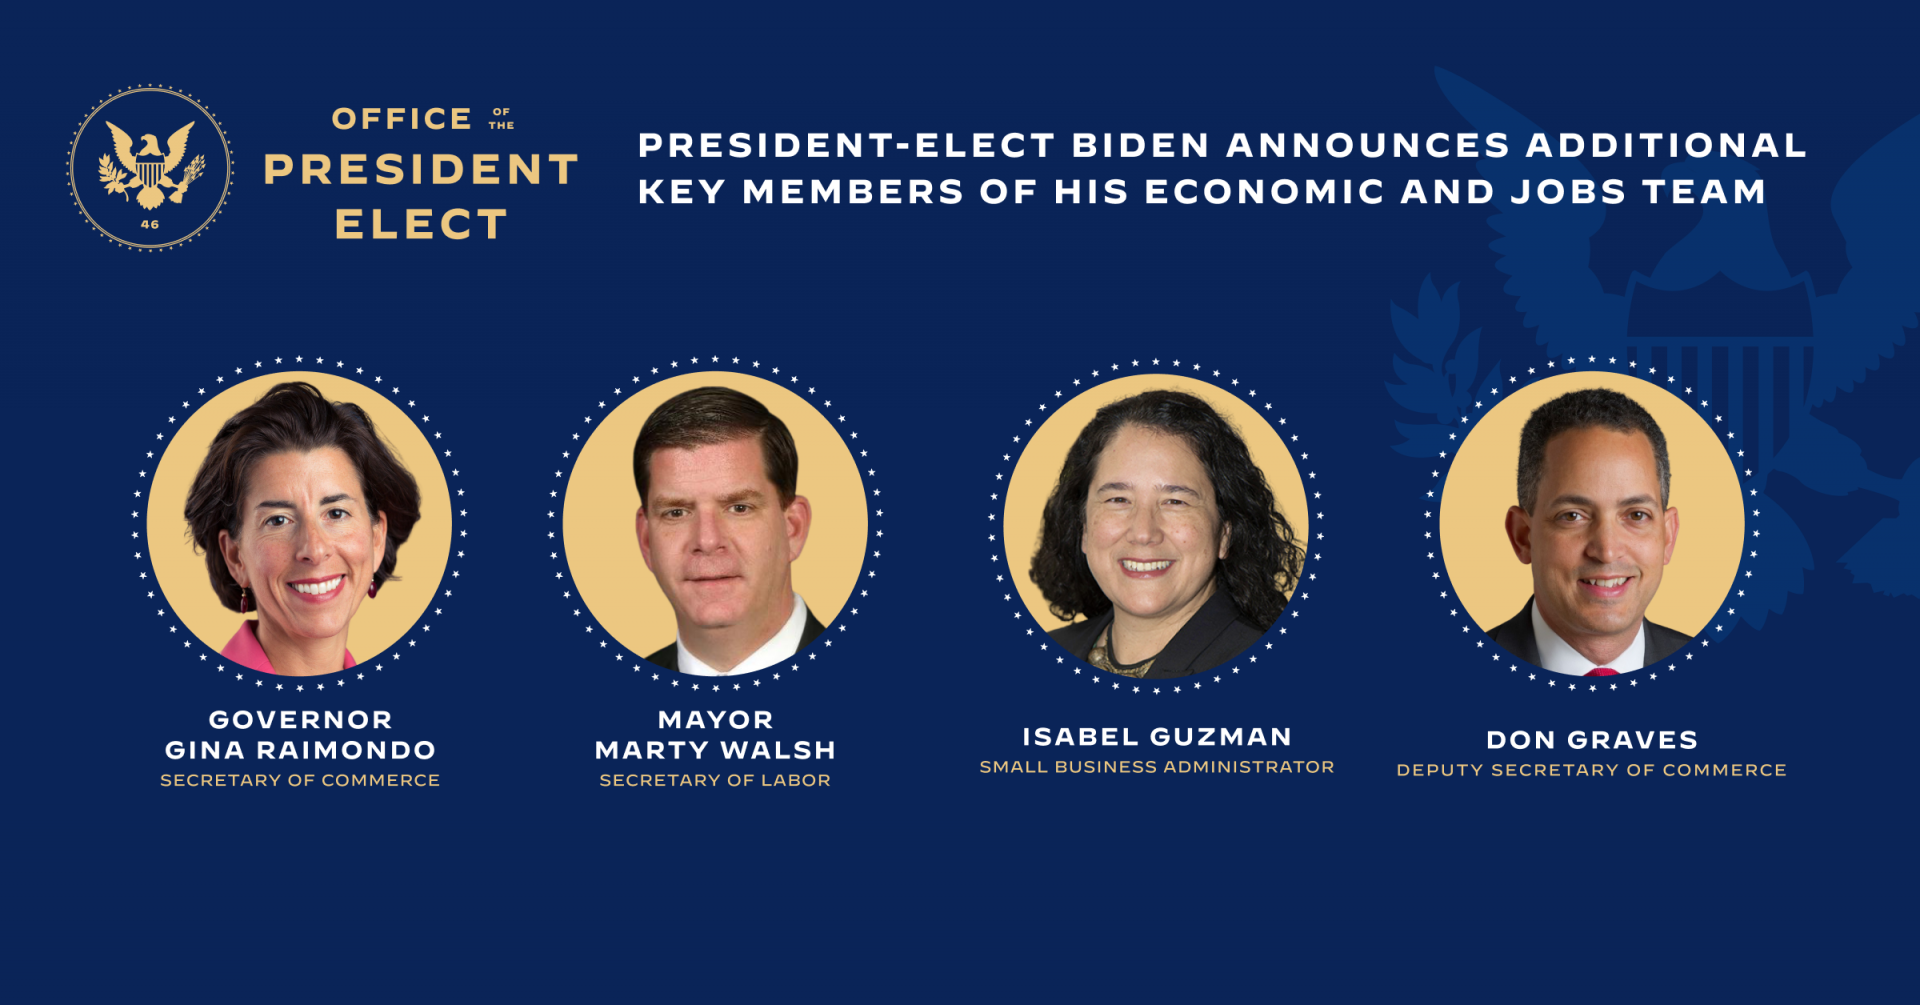 Biden’s pick for key members of Economic and Jobs Team